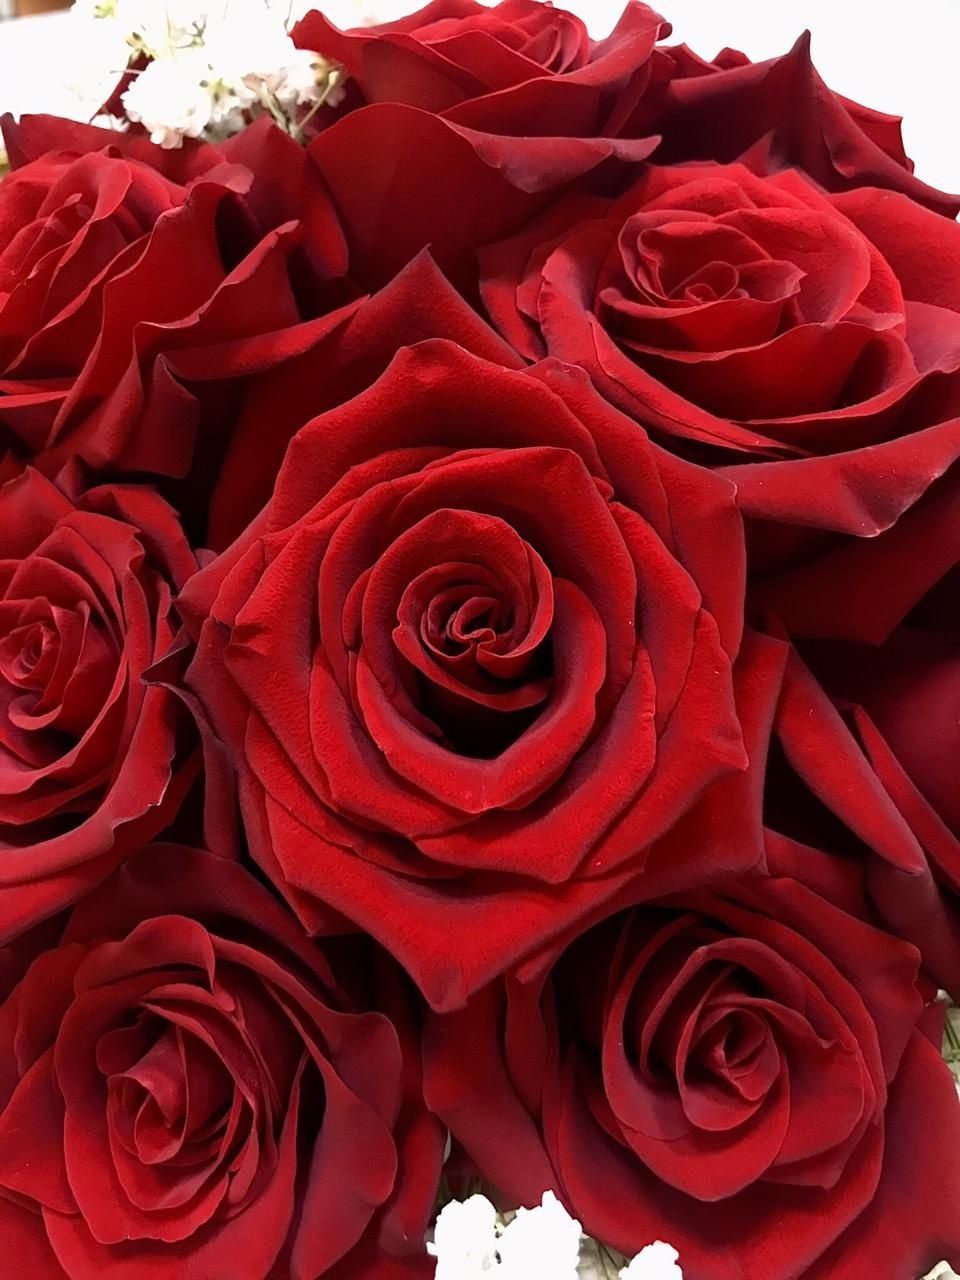 Jelang Valentine, Pembeli Rose Merah Melonjak Dua Kali Lipat